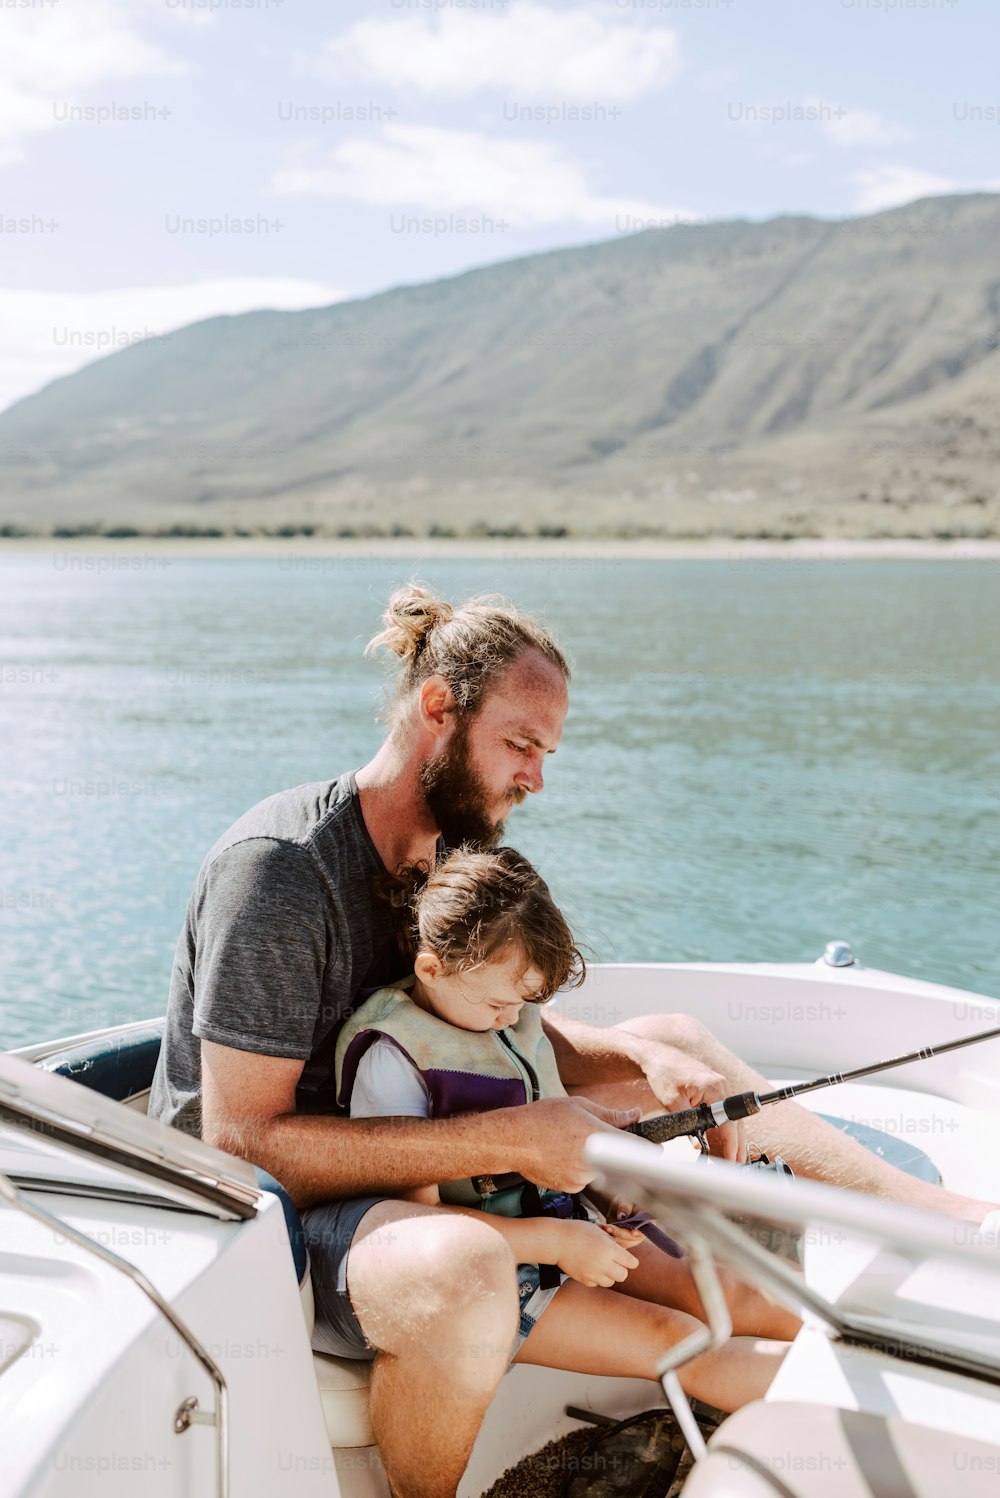 Un uomo e una bambina su una barca